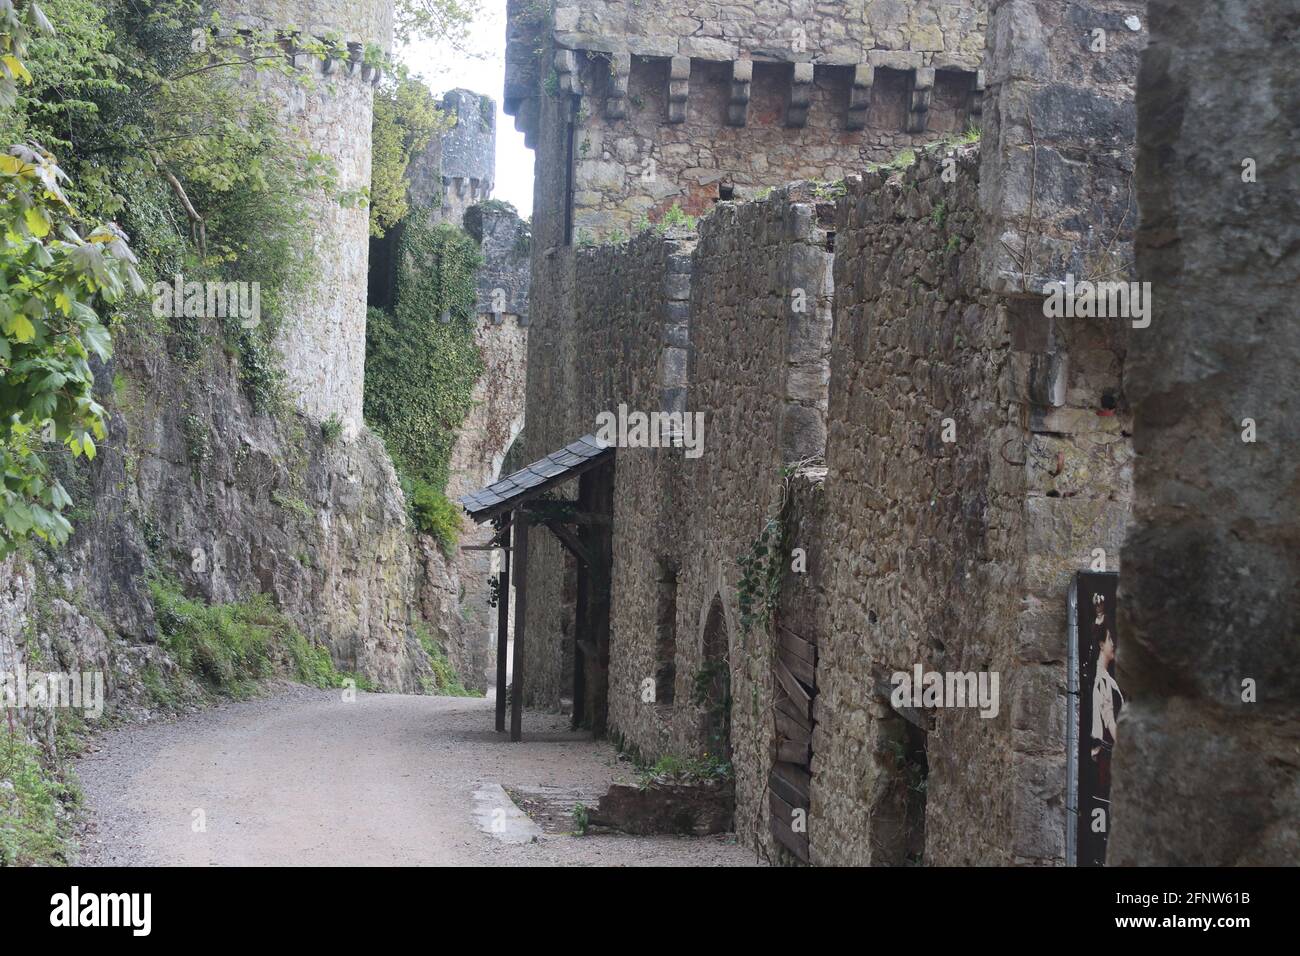 Gwrych Castle - Louis Vuitton x Gwrych Castle #LVMenFW21